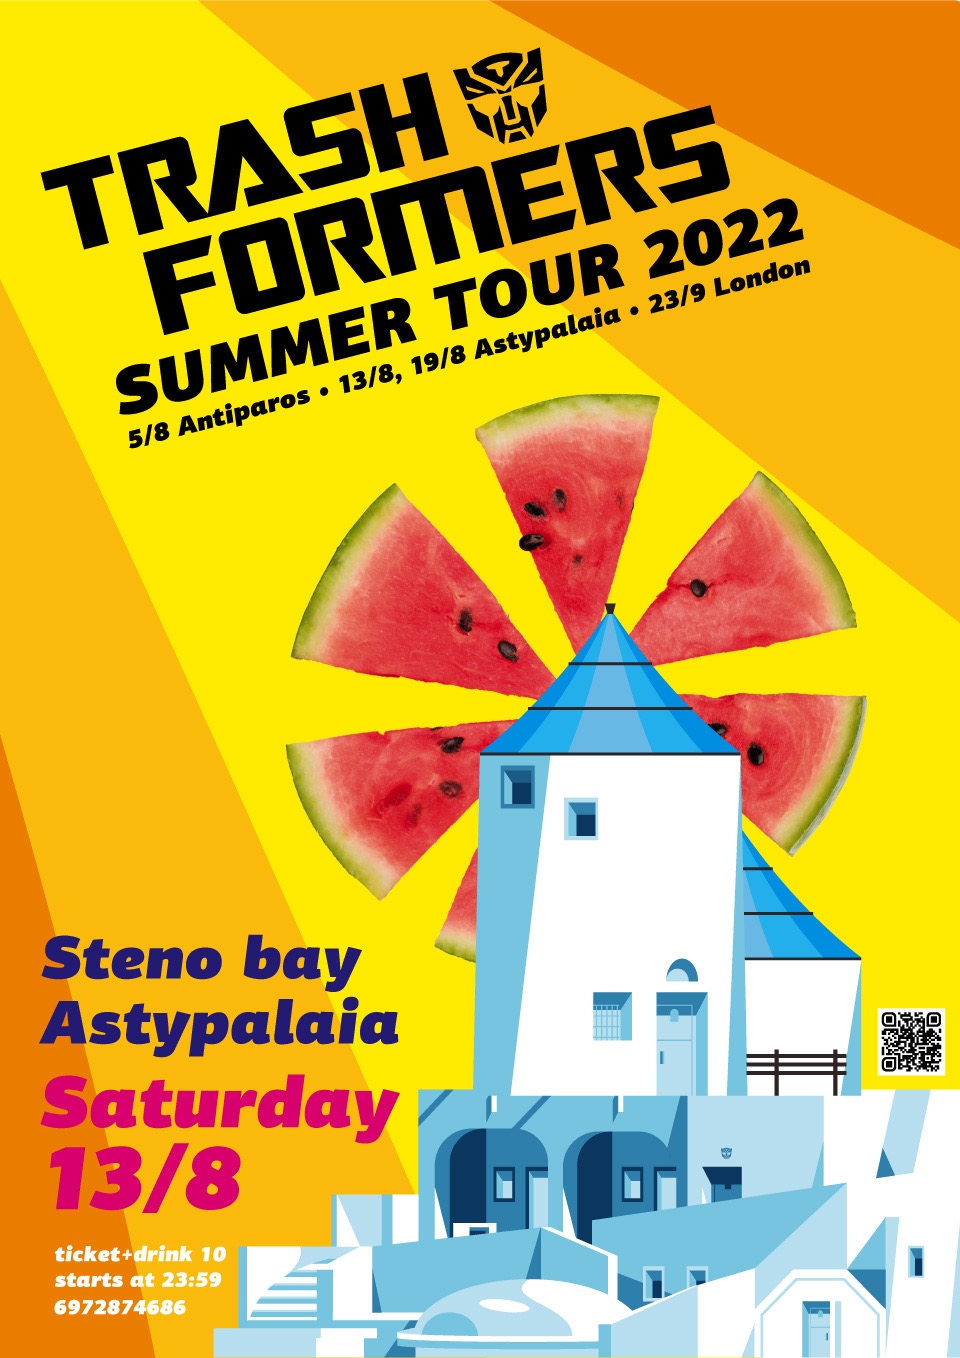 Trashformers Summer Tour 2022 - Astypalaia 